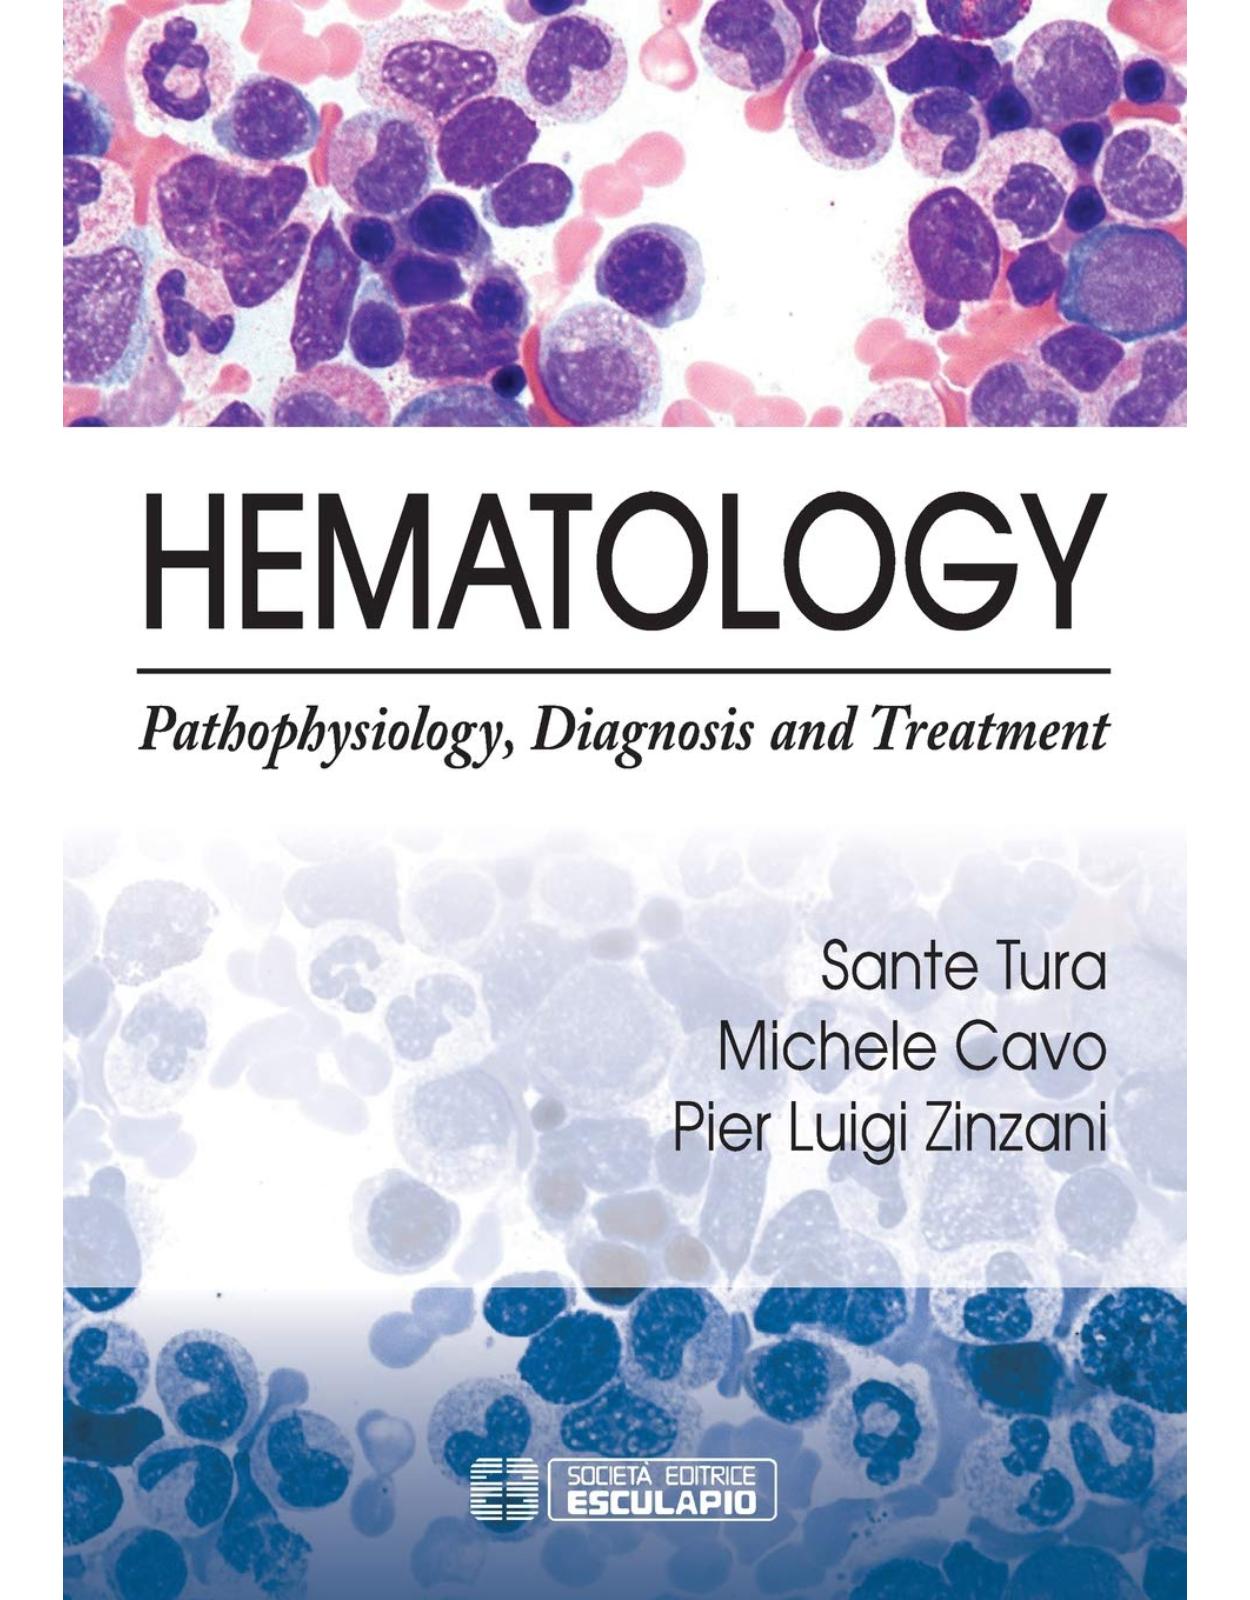 Hematology: Pathophysiology, Diagnosis and Treatment